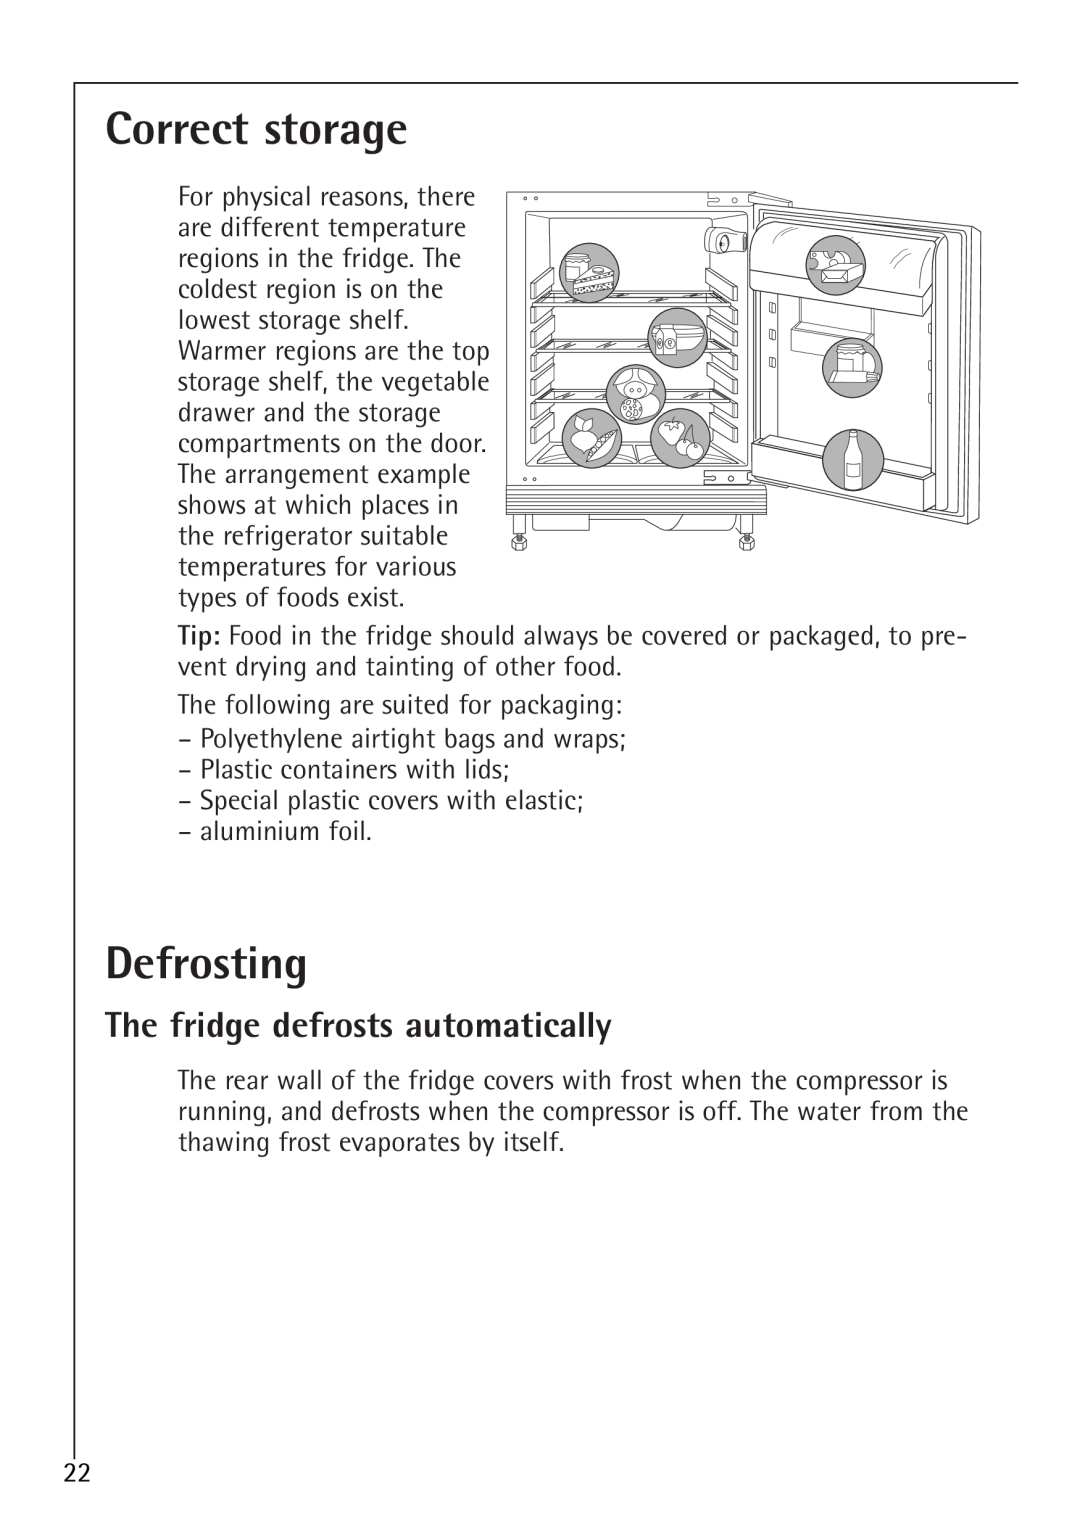 Electrolux U 86000-4 manual Correct storage, Defrosting, The fridge defrosts automatically 